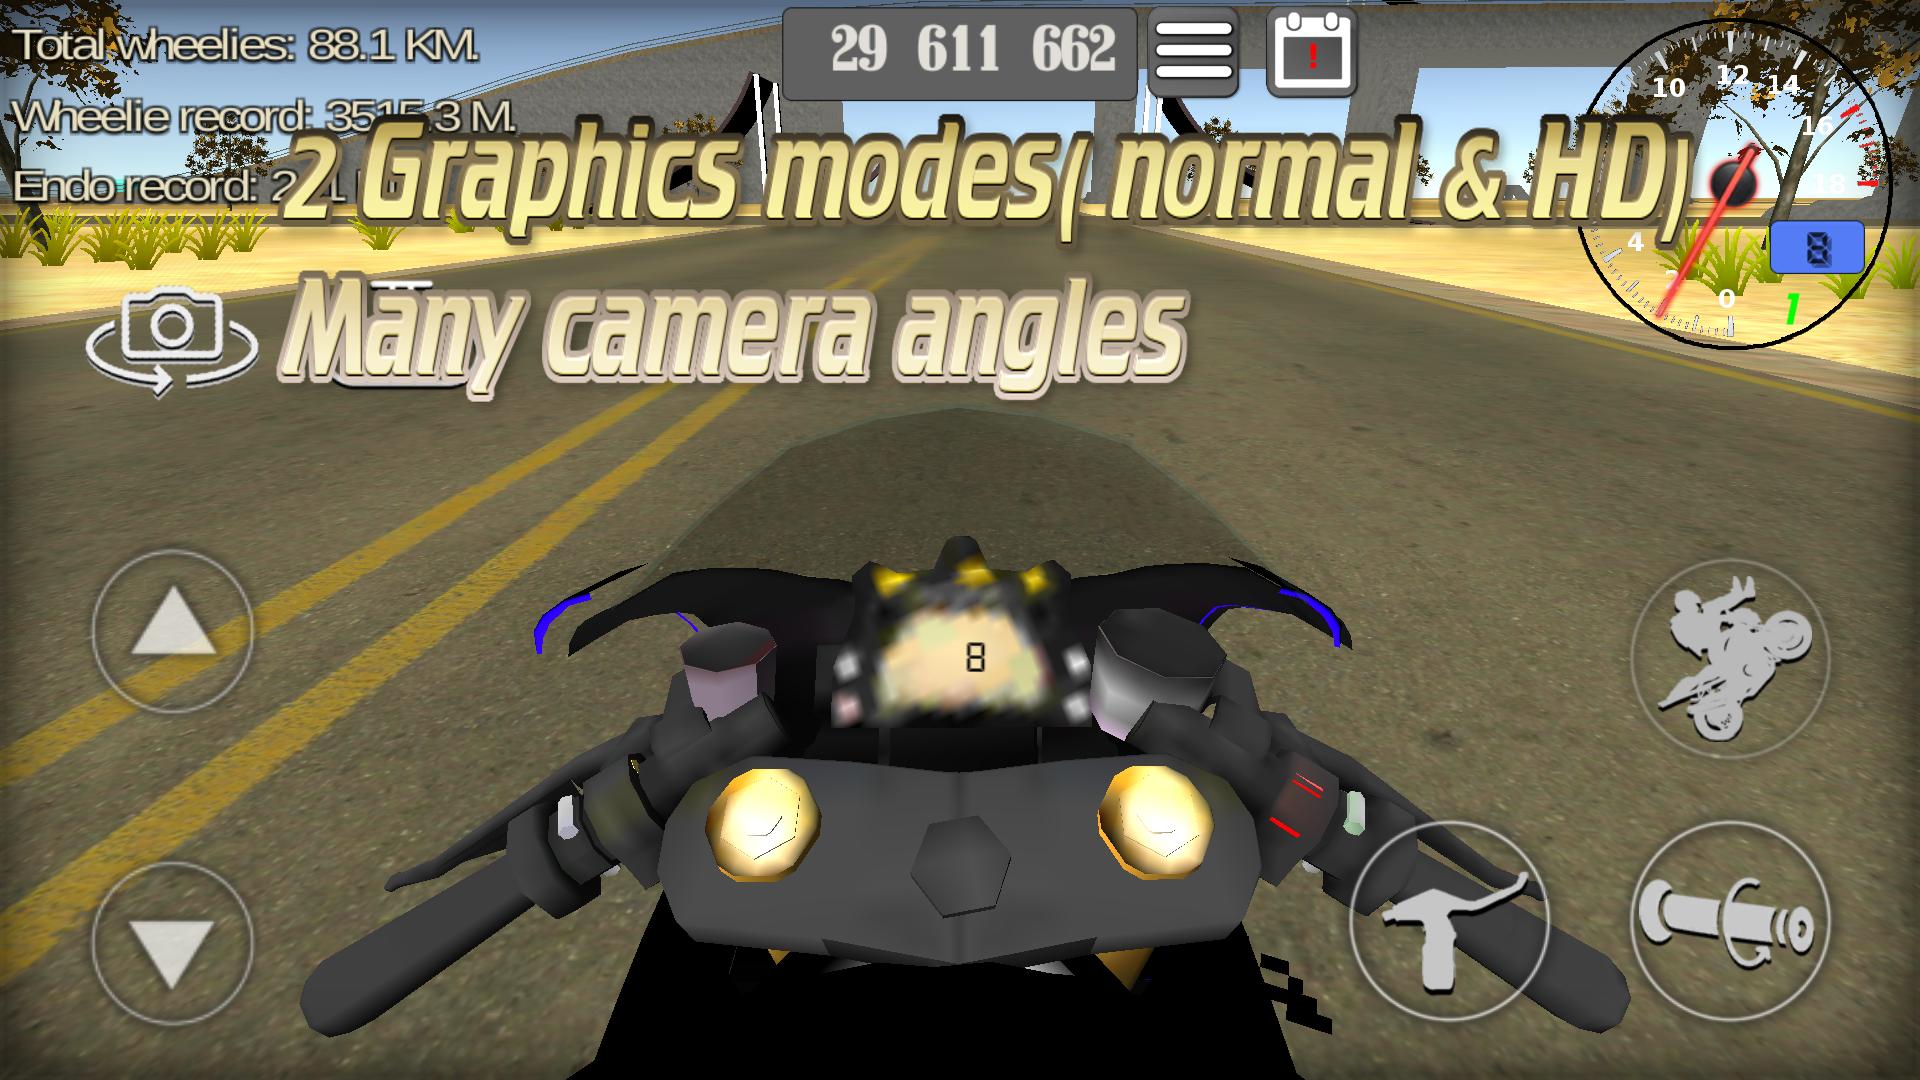 Wheelie King 3D Realistic free  motorbike racing 1.0 Screenshot 6